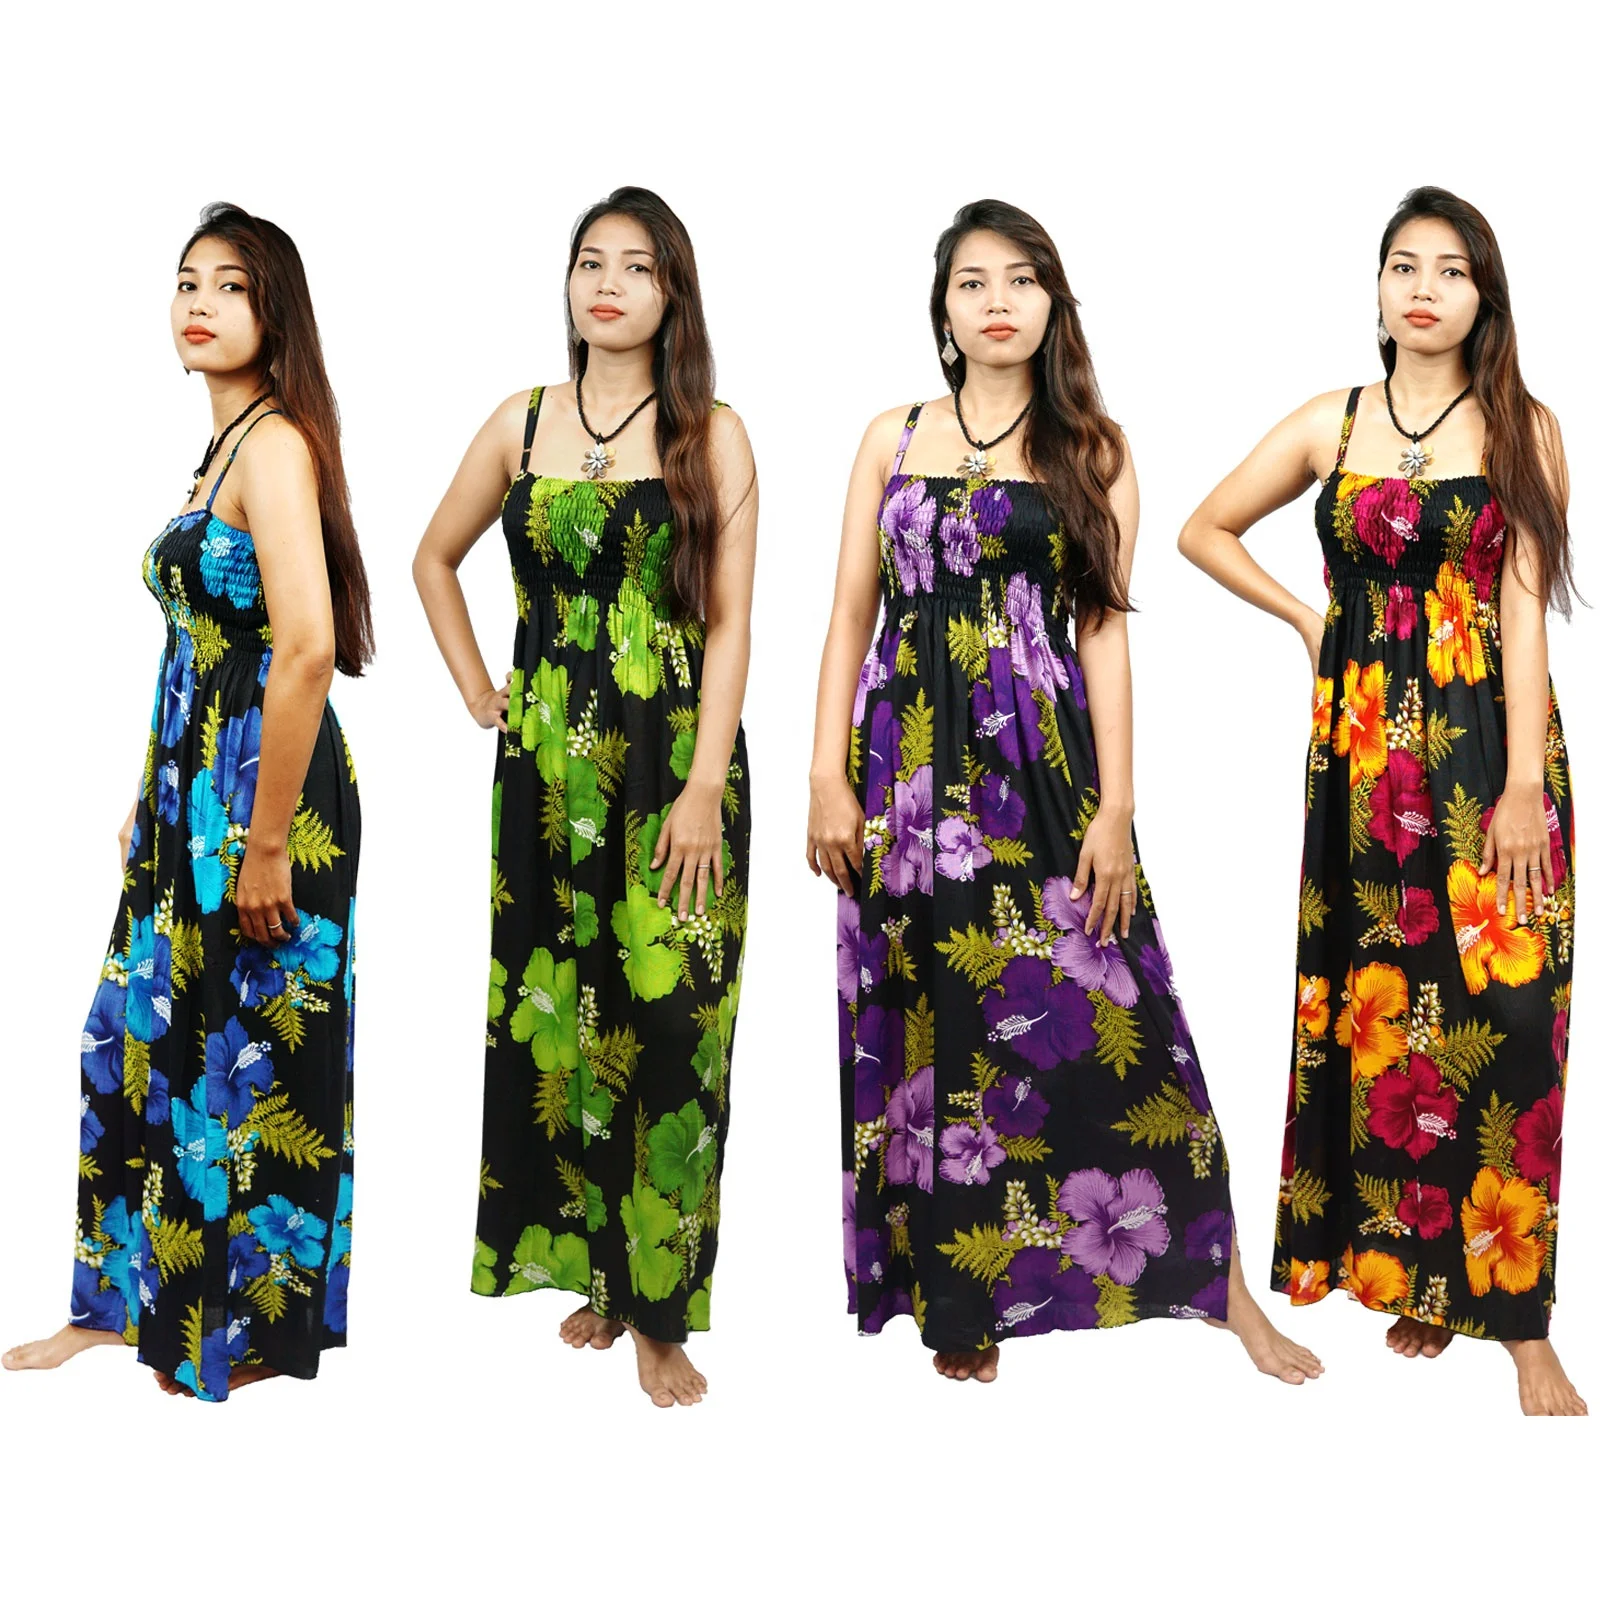 $8/each-wholesale dresses lot of 12 beach dresses long dresses casual sundresses 